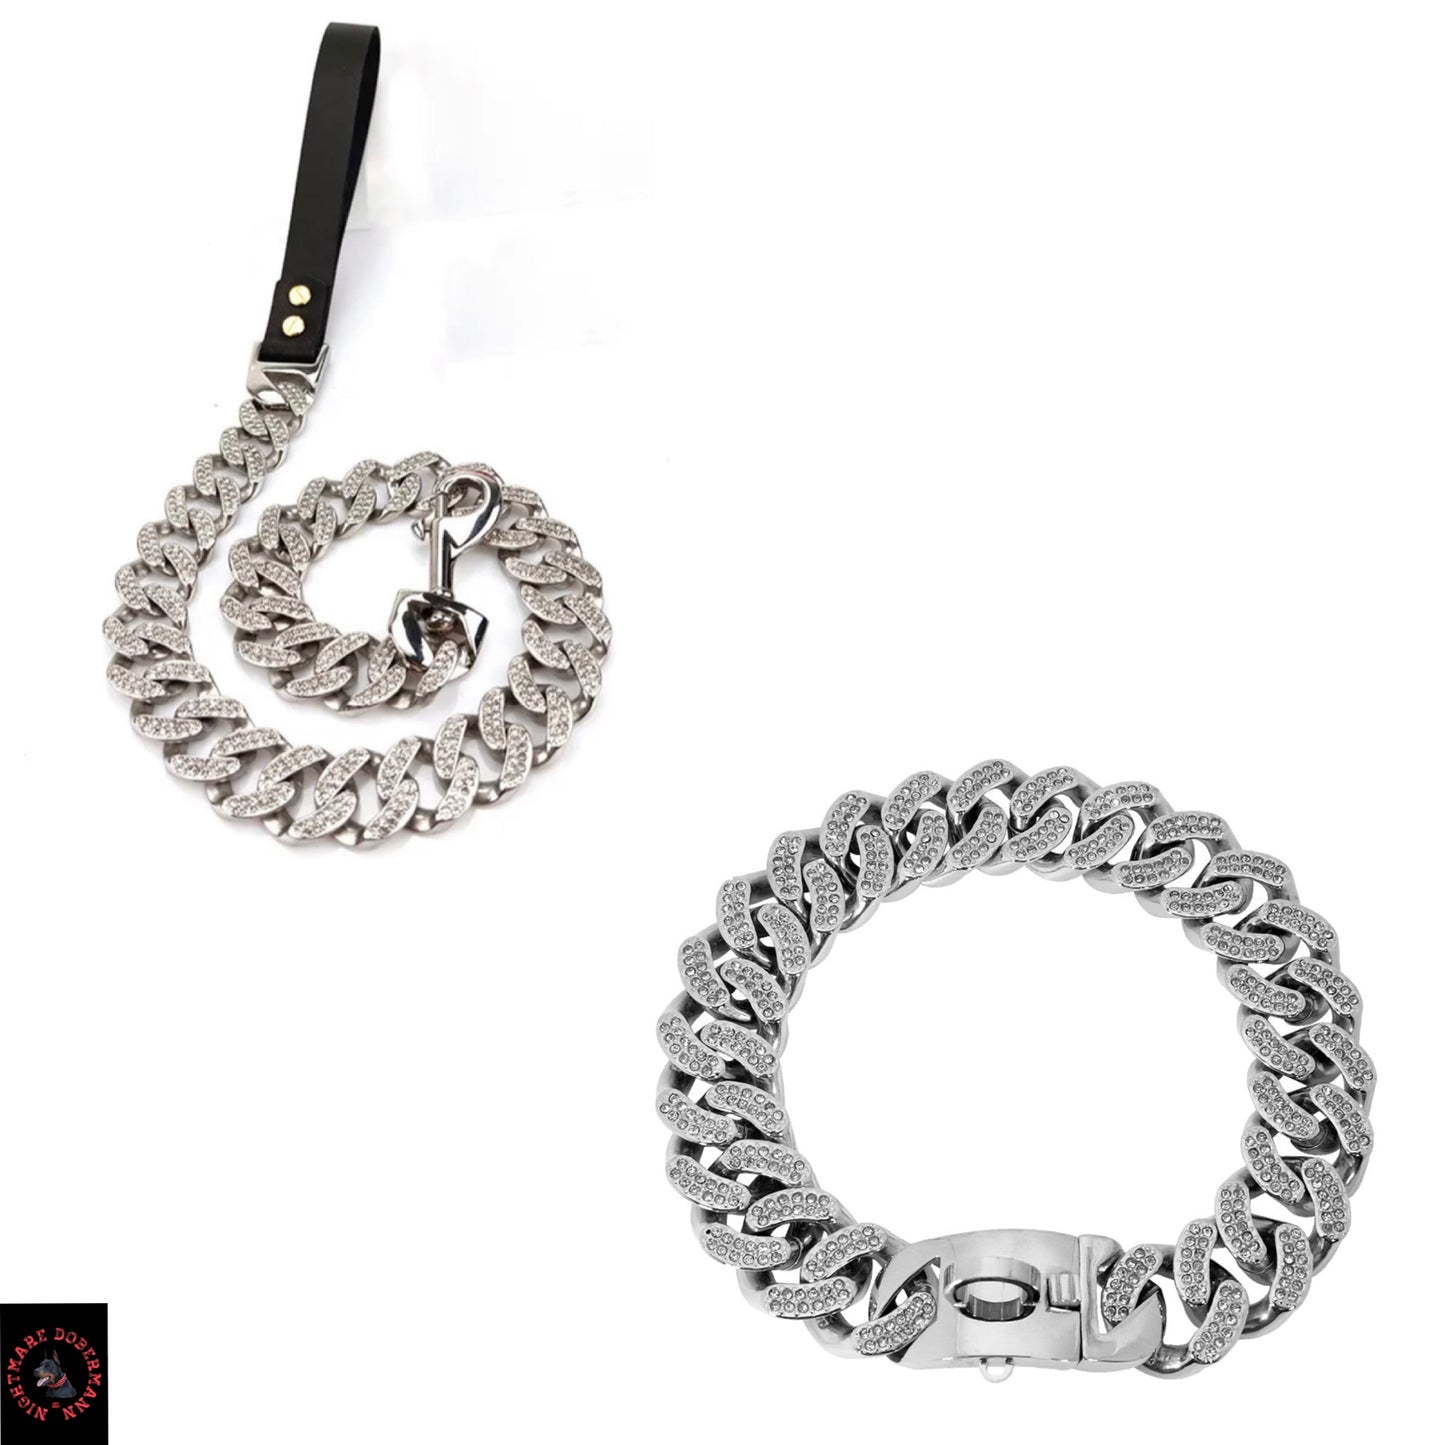 Silver With Diamonds Luxury Dog Collar + Luxury Silver With Diamonds Leash Bundle